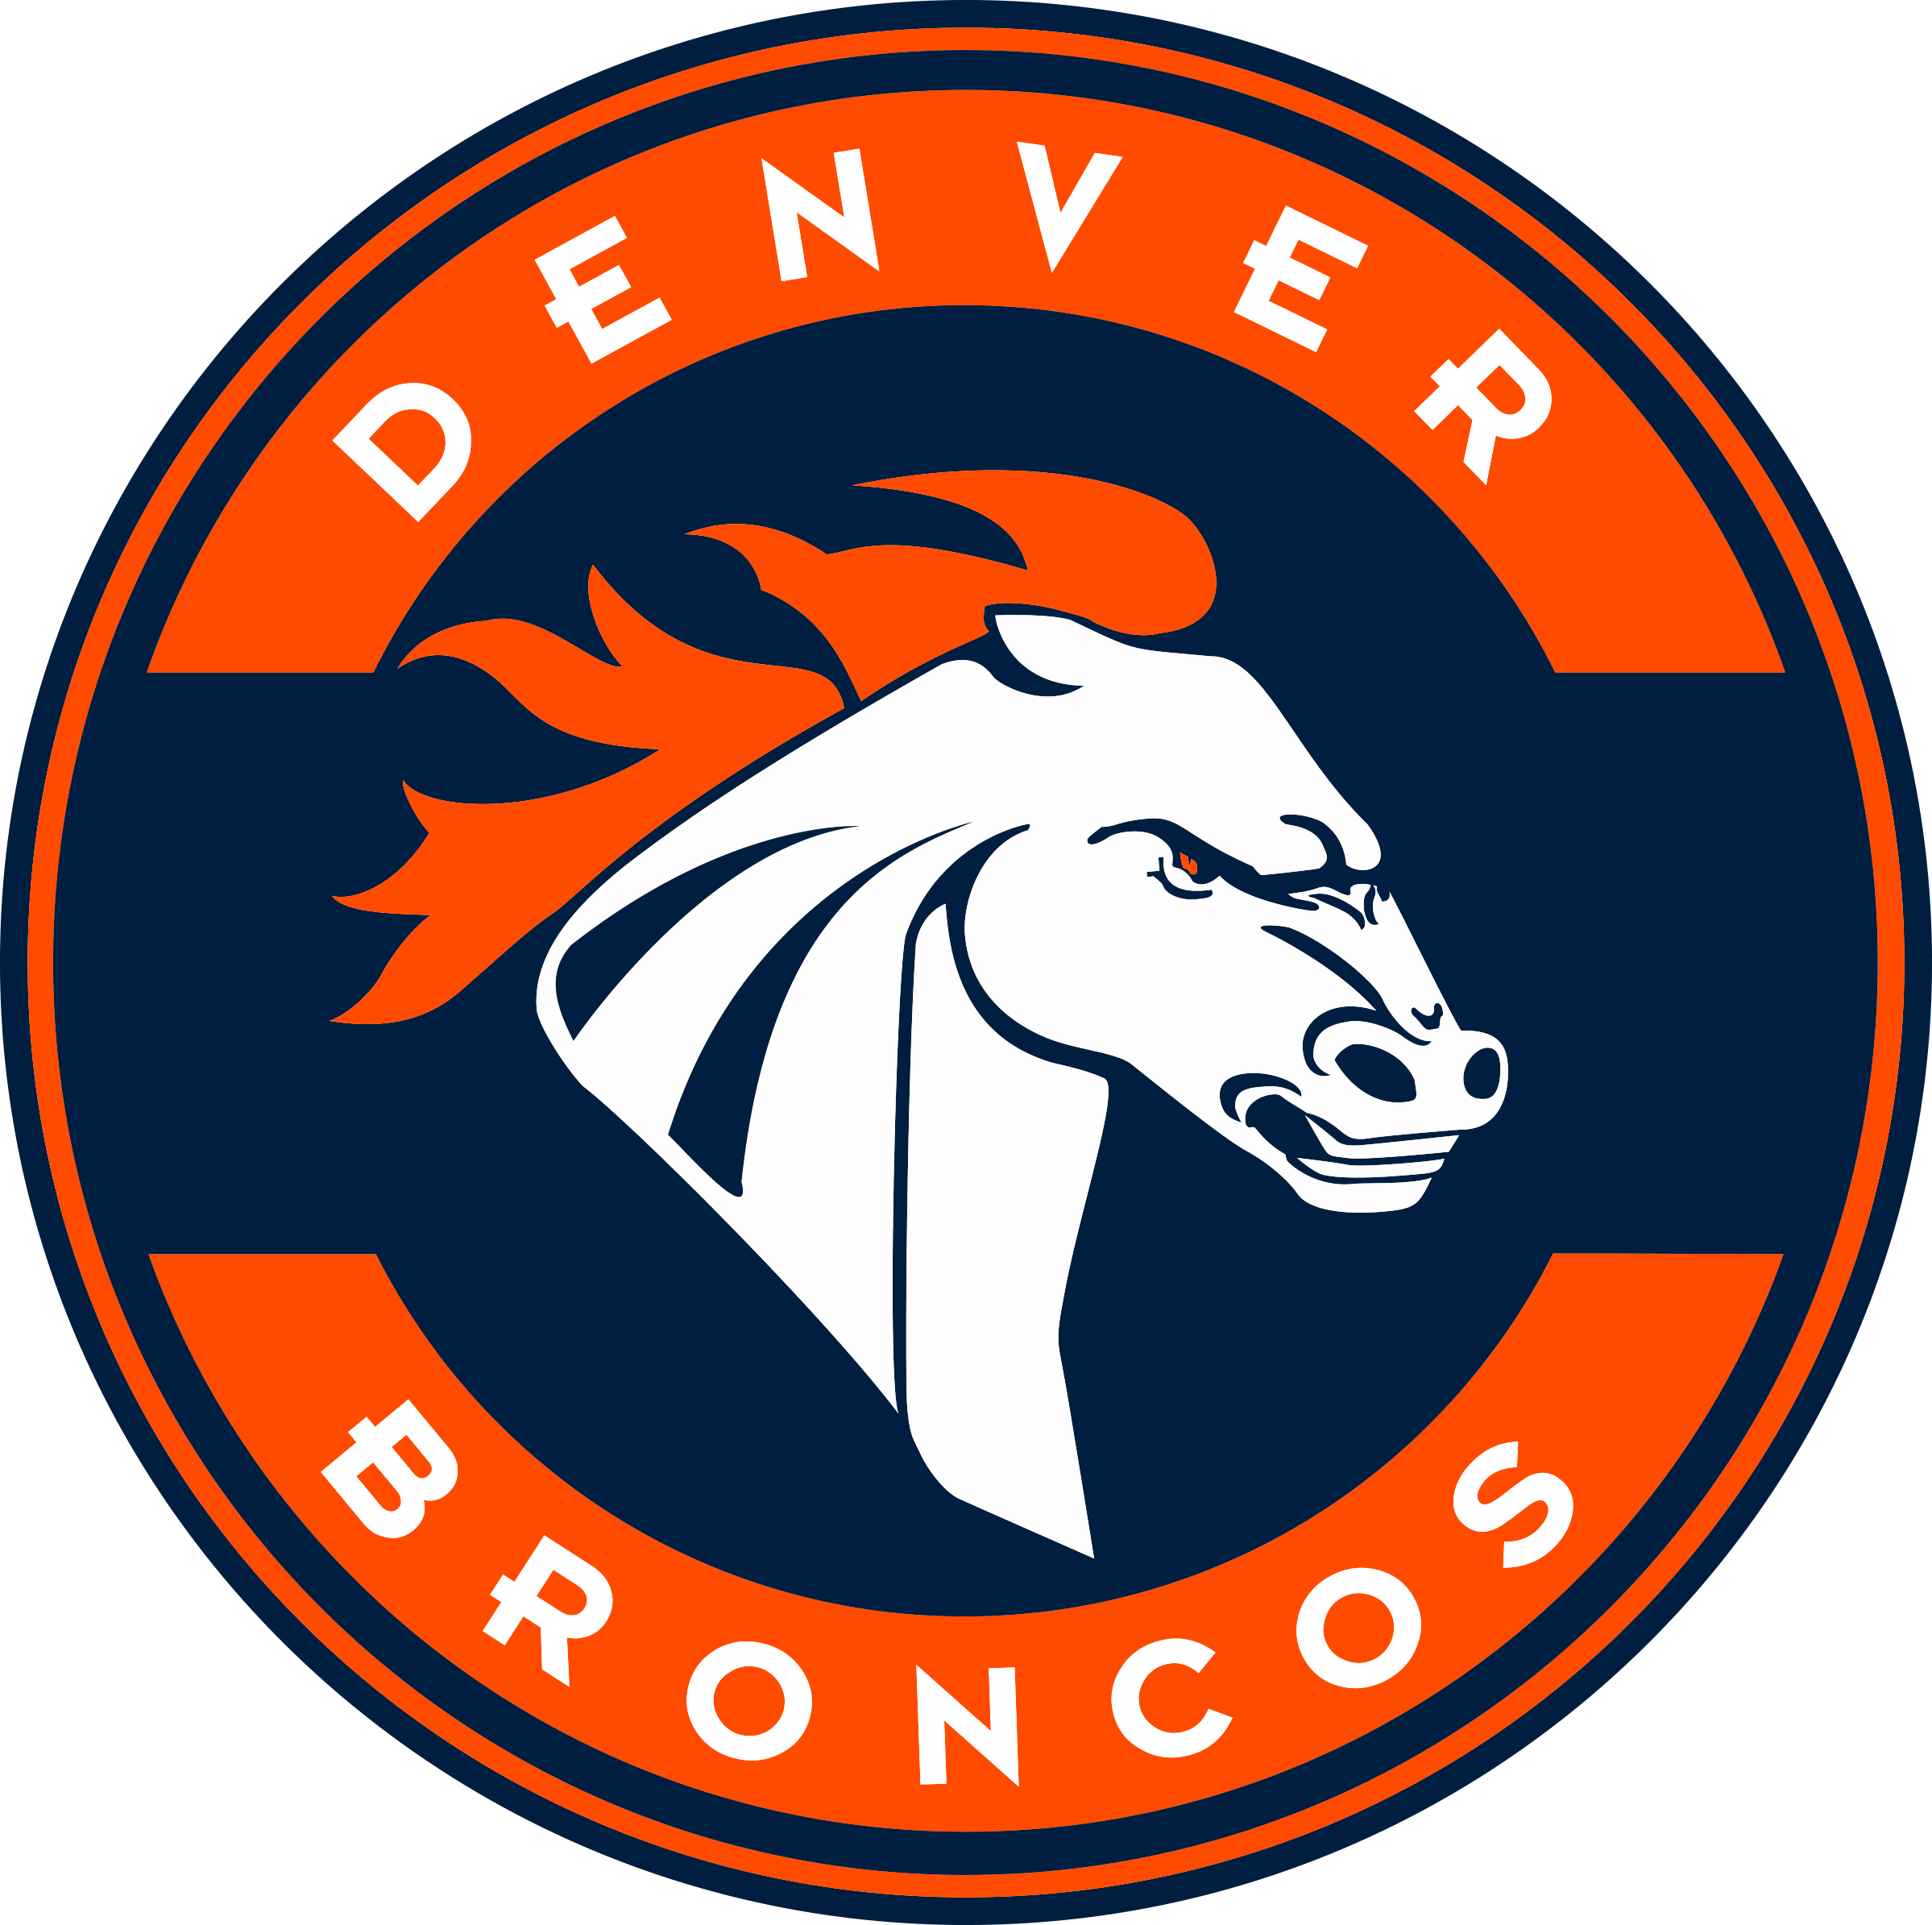 Broncos Logo PNG Images